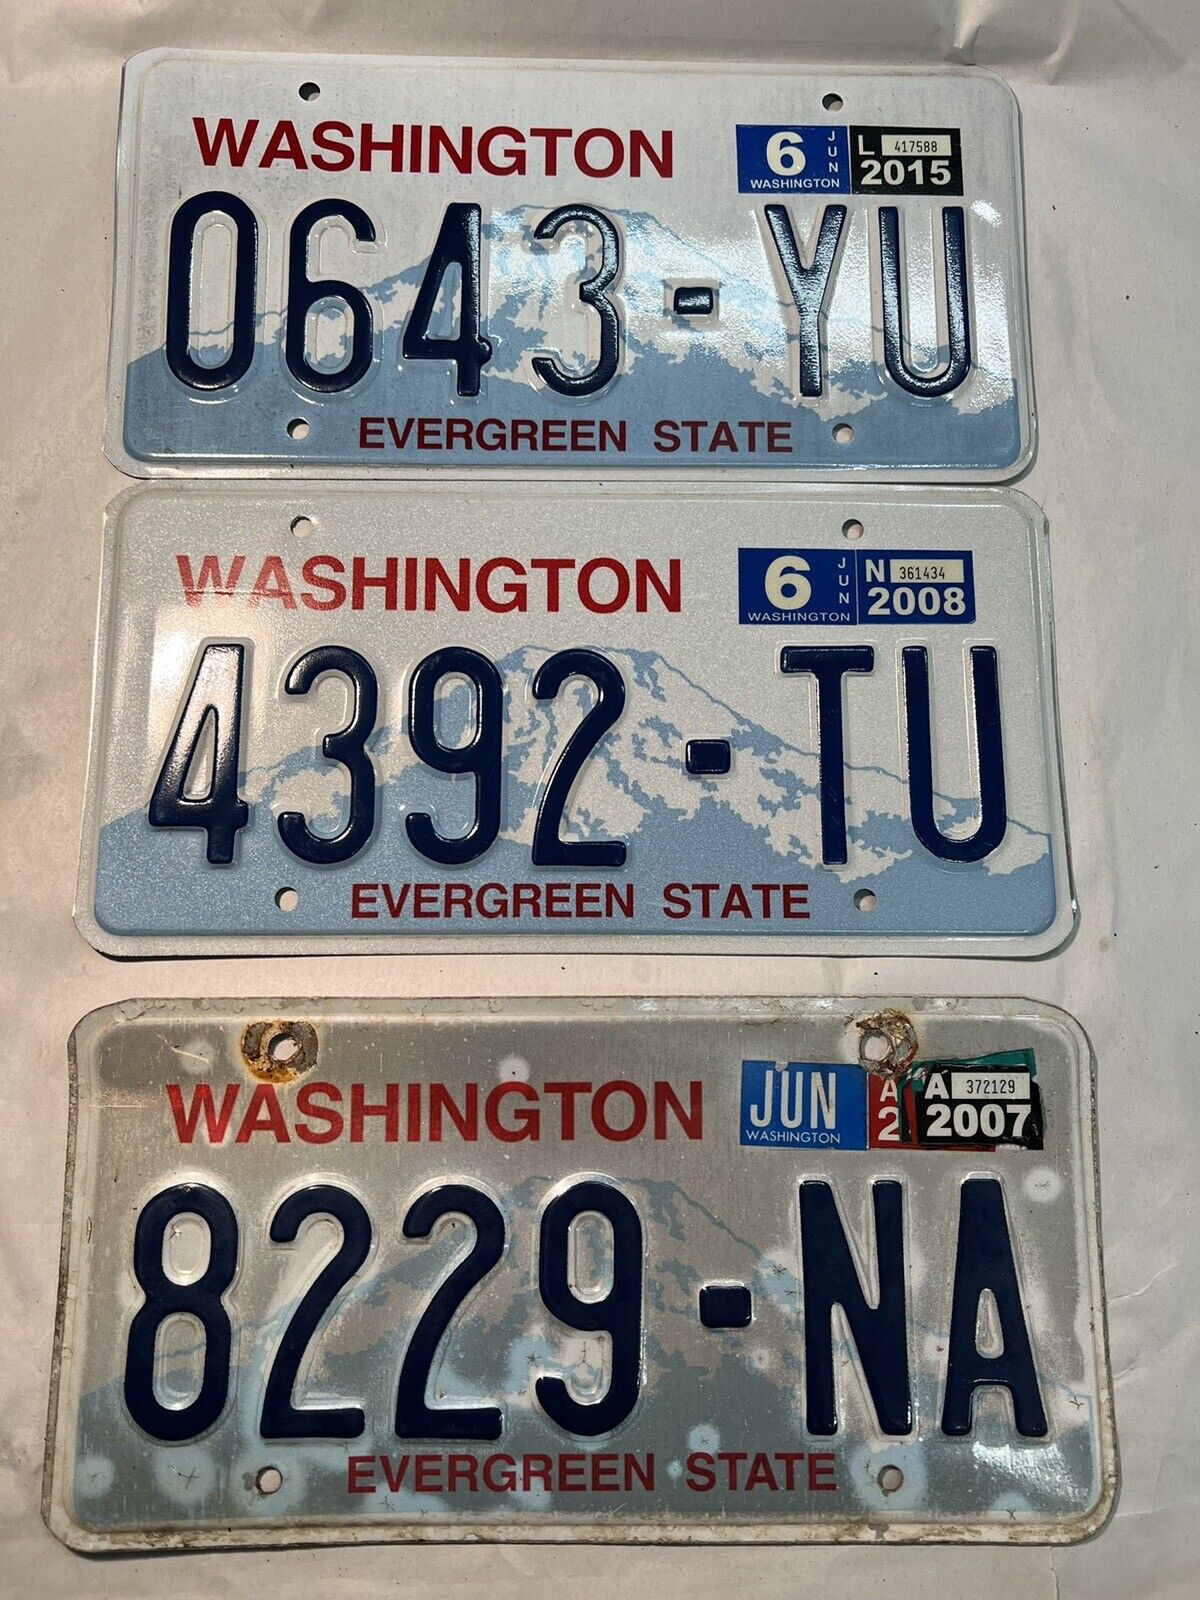 3 Vintage WASHINGTON LICENSE PLATES Trailer Plates (0643-YU, 4392-TU, 8229-NA)